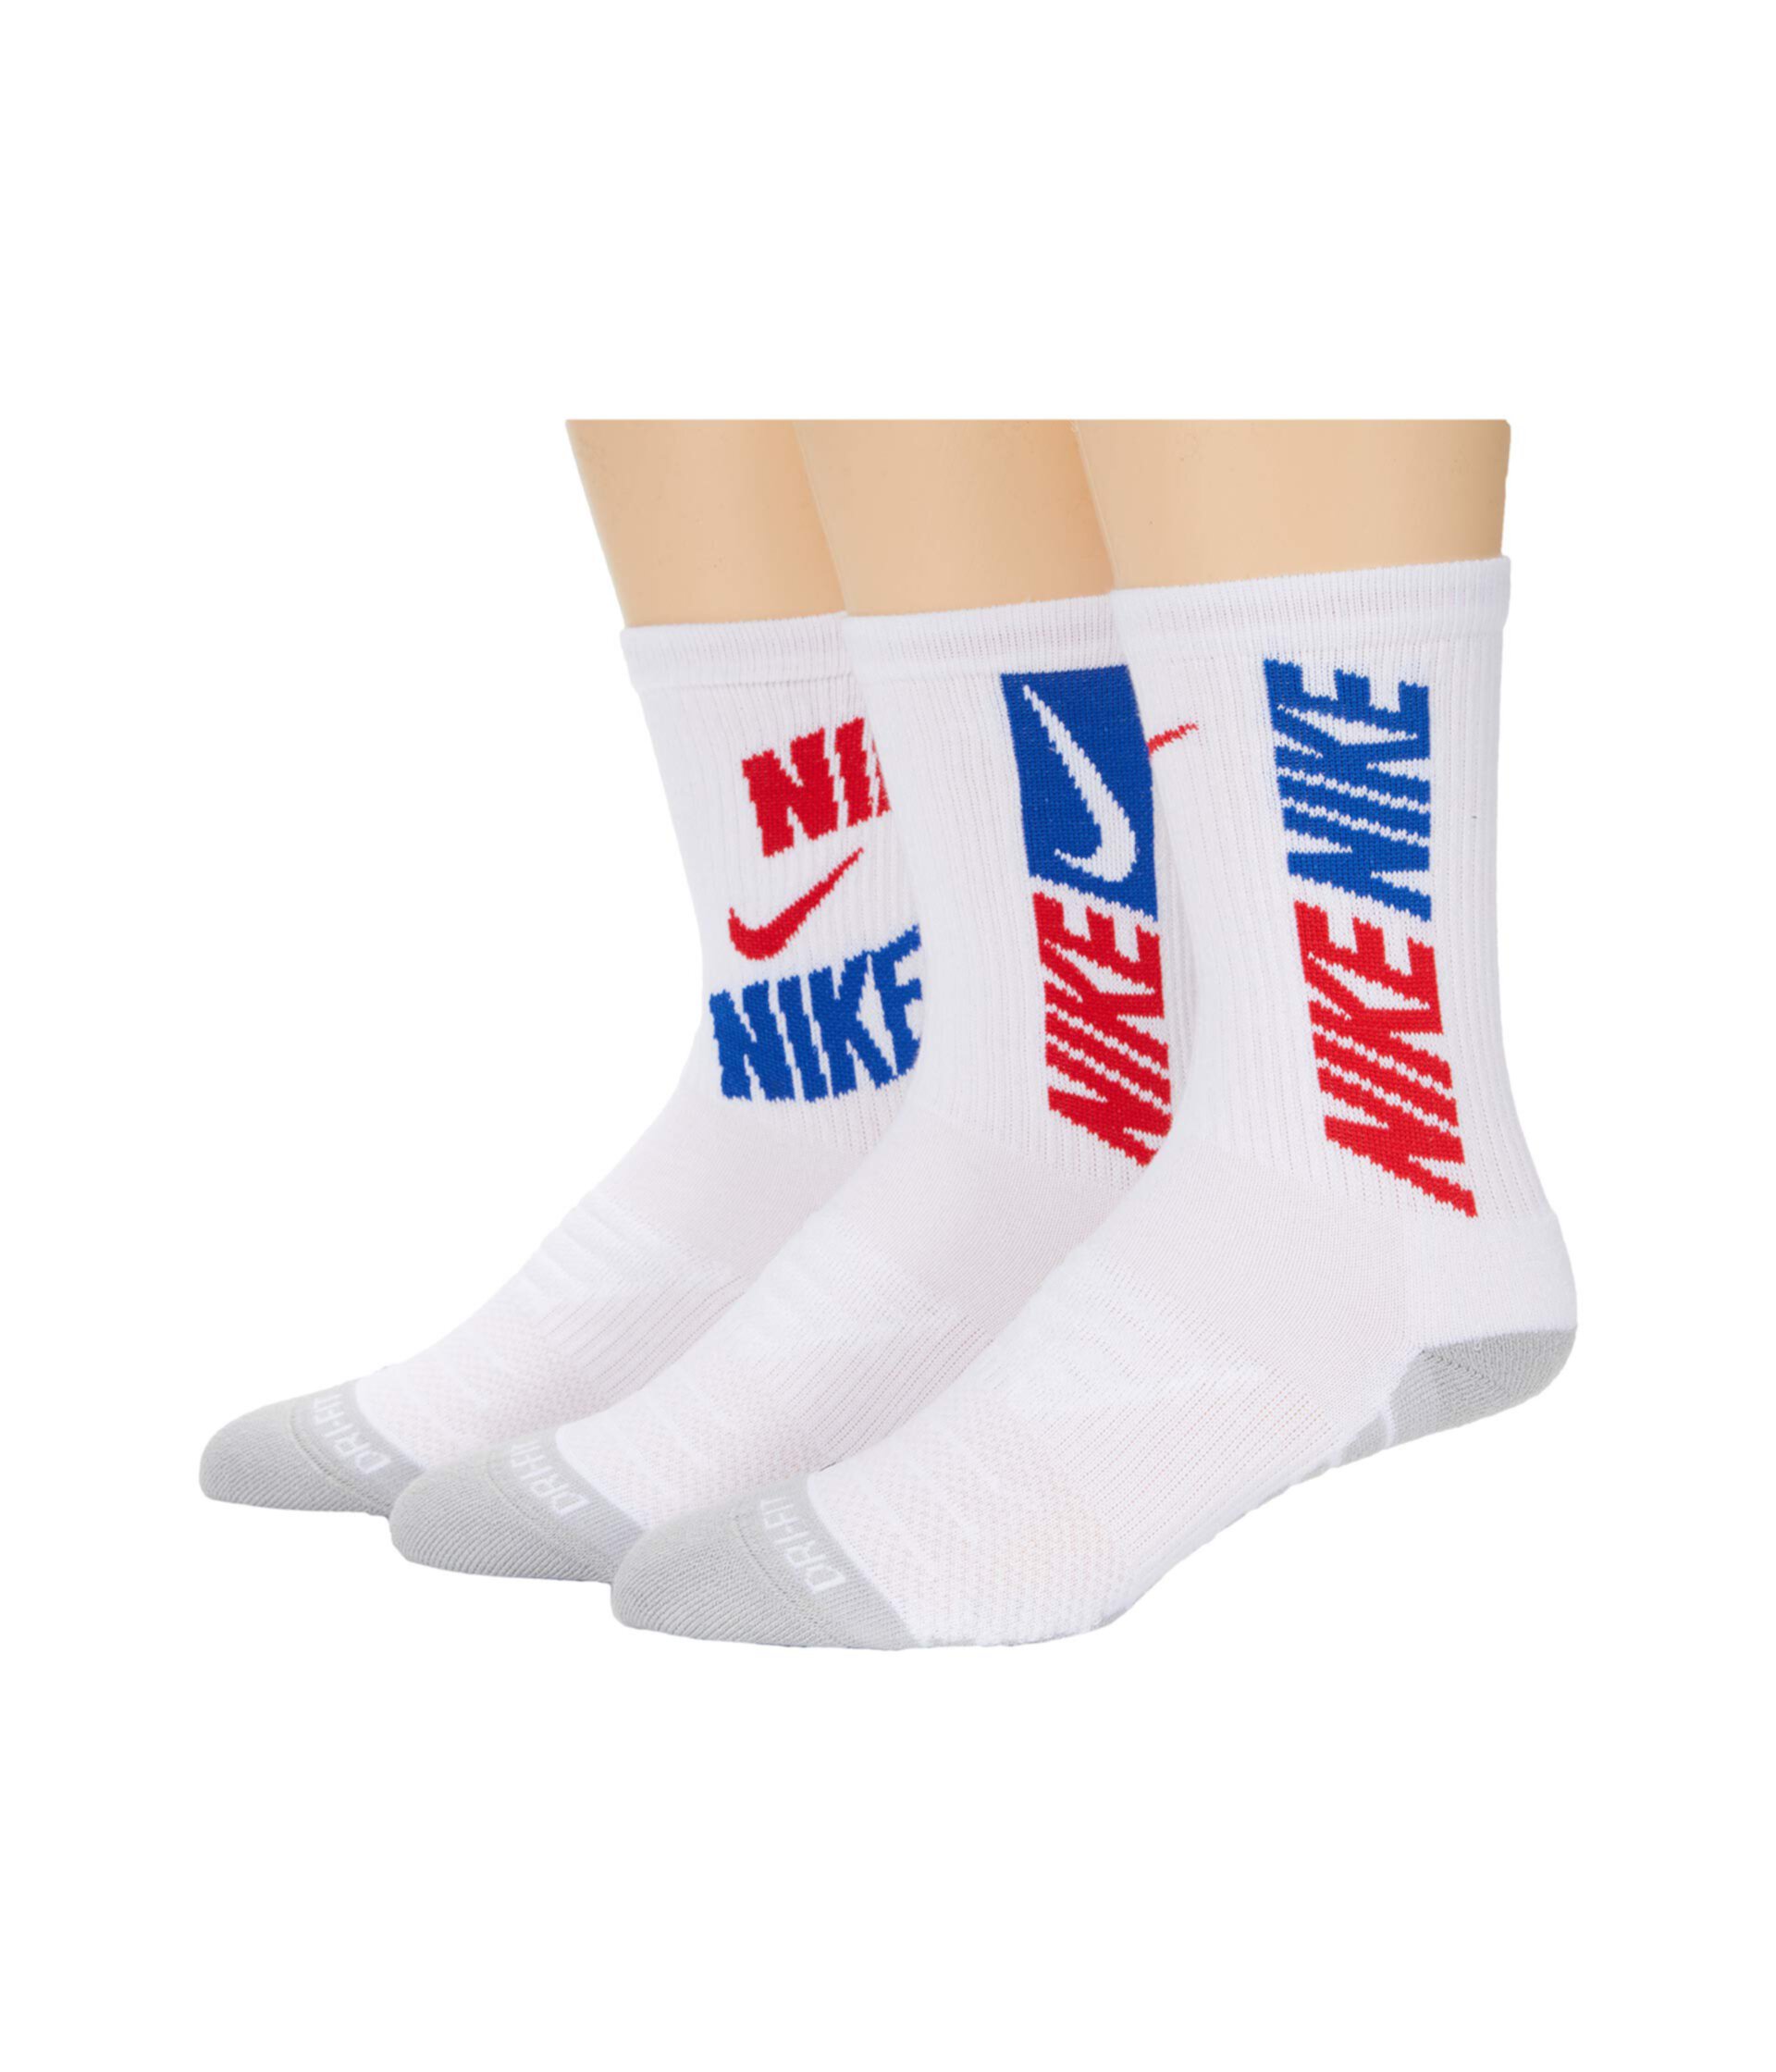 Комплект из 3 пар пары удобных носков Maxim Nike